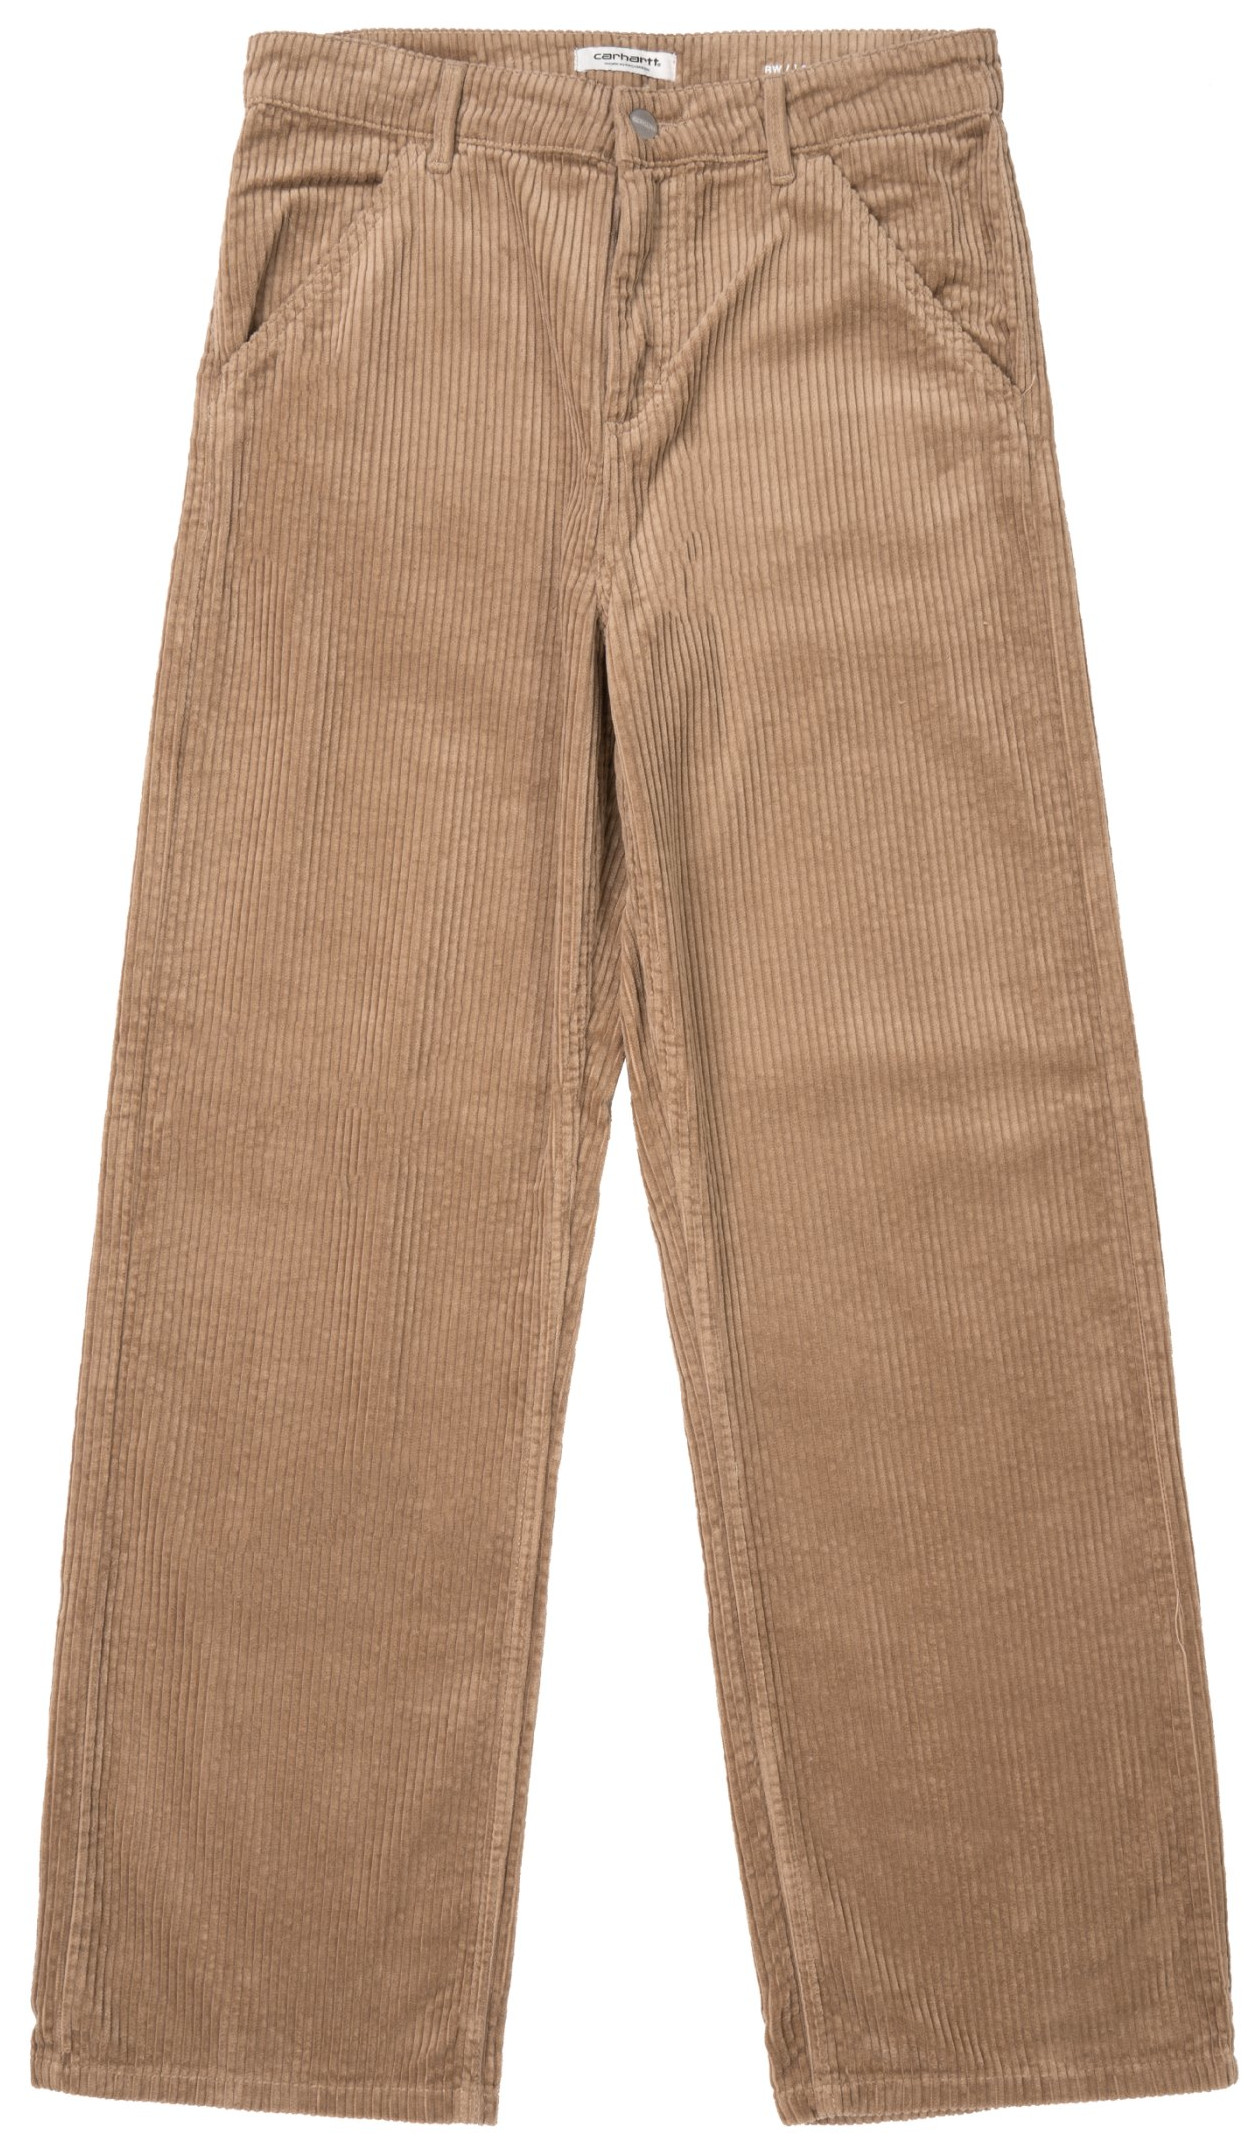 Dámské kalhoty Carhartt WIP Simple